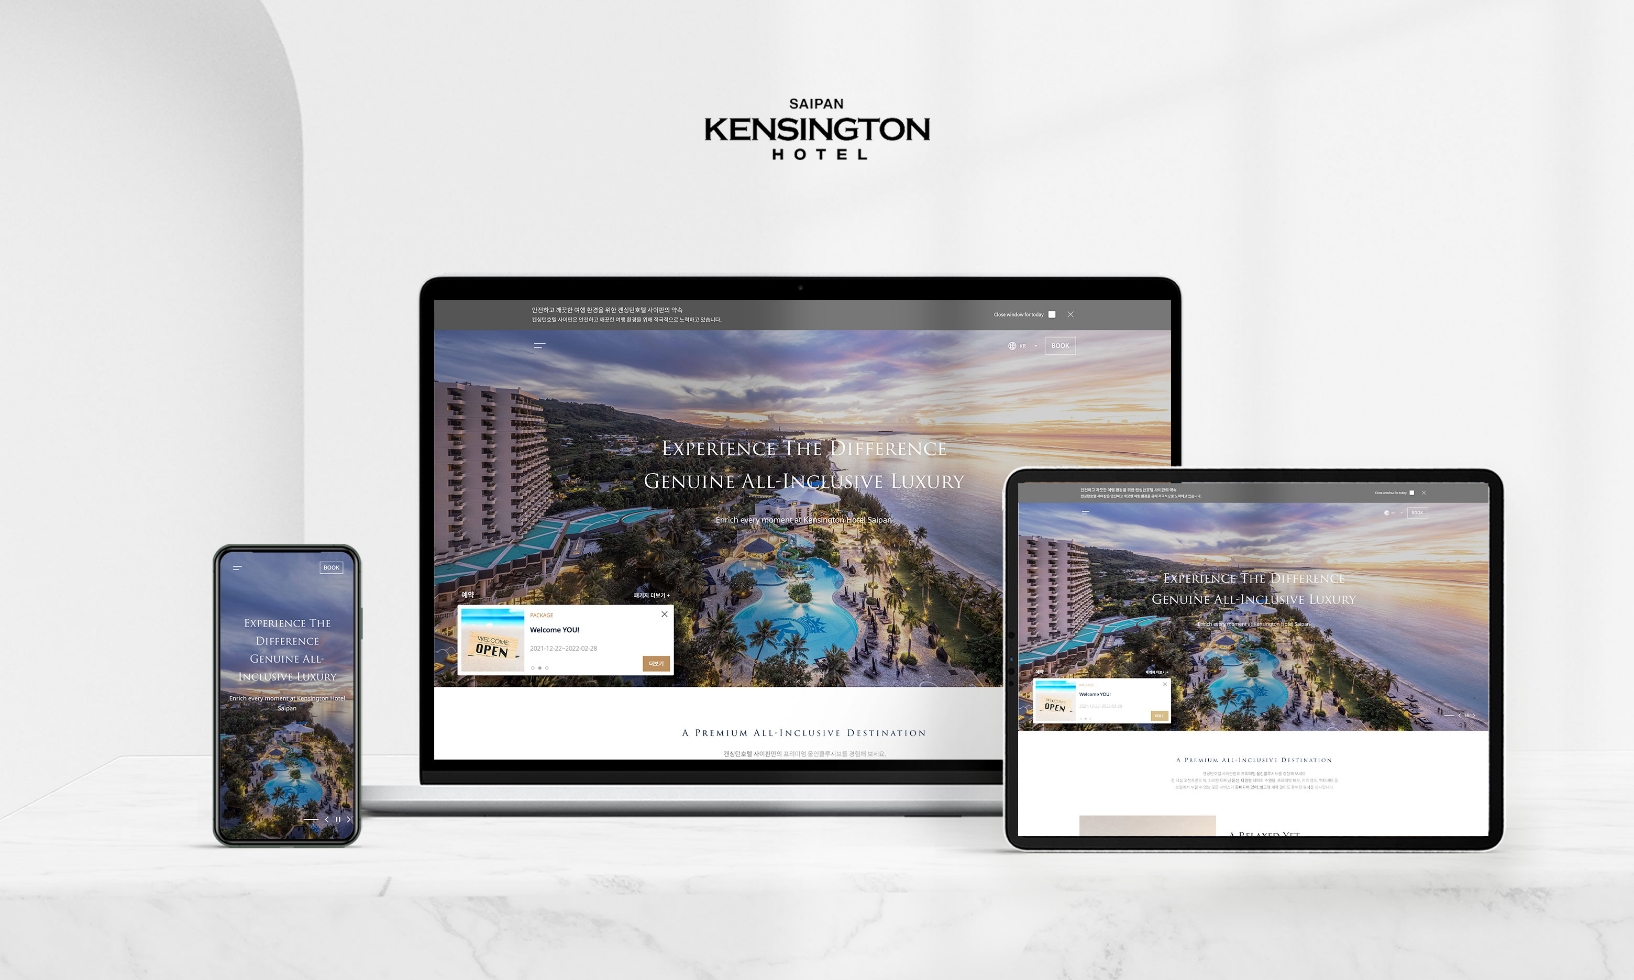 Kensington Hotel Saipan website image